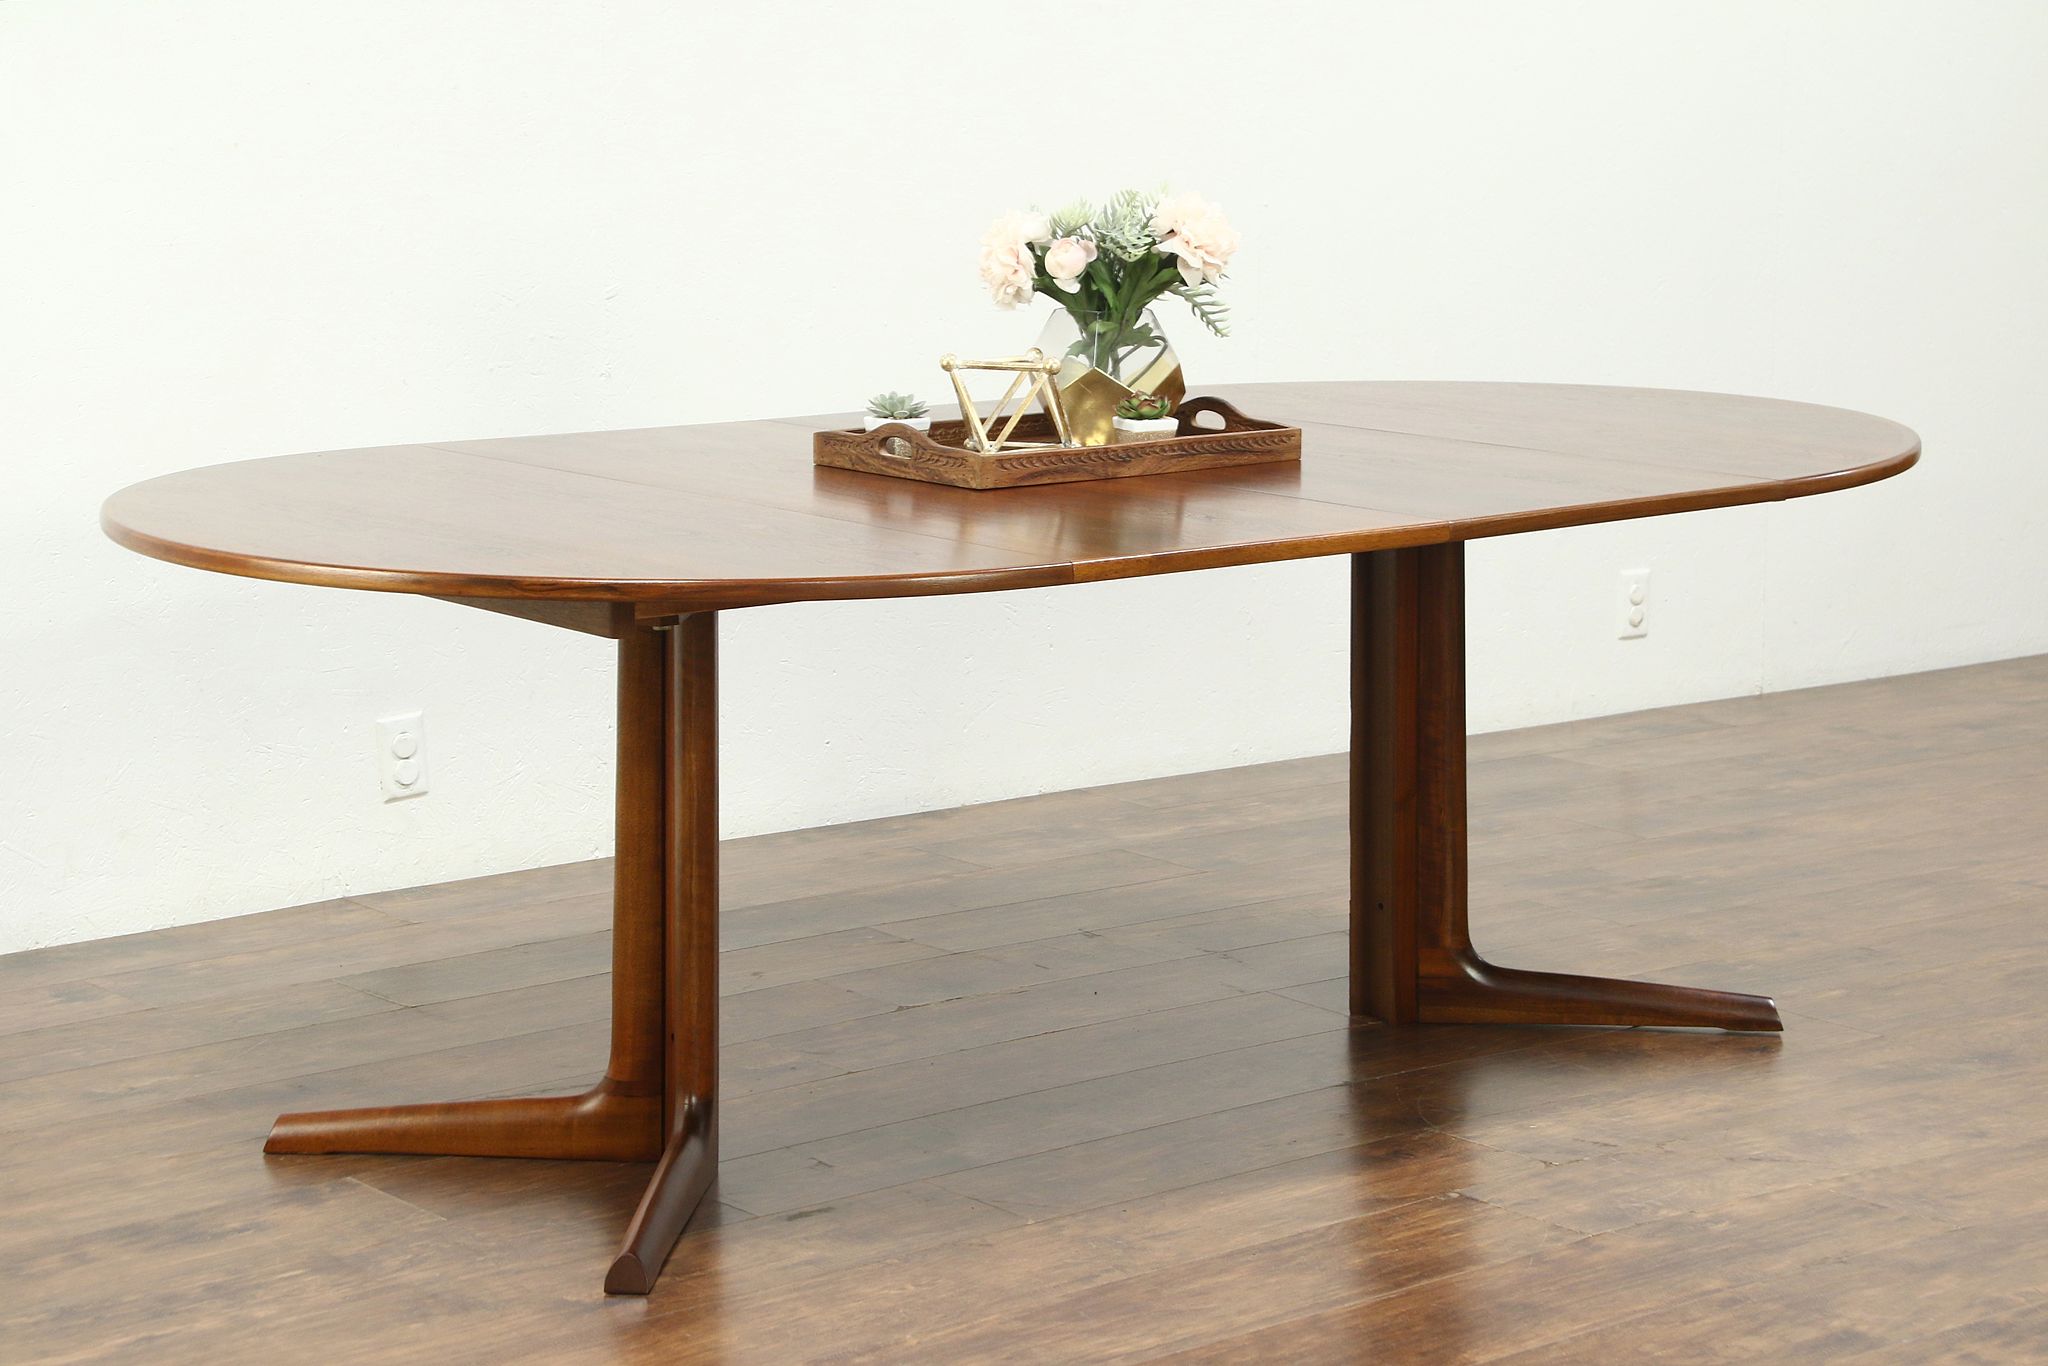 Sold Teak Midcentury Modern 1960 Vintage Dining Table 2 Leaves Extends 86 28636 Harp Gallery Antiques Furniture